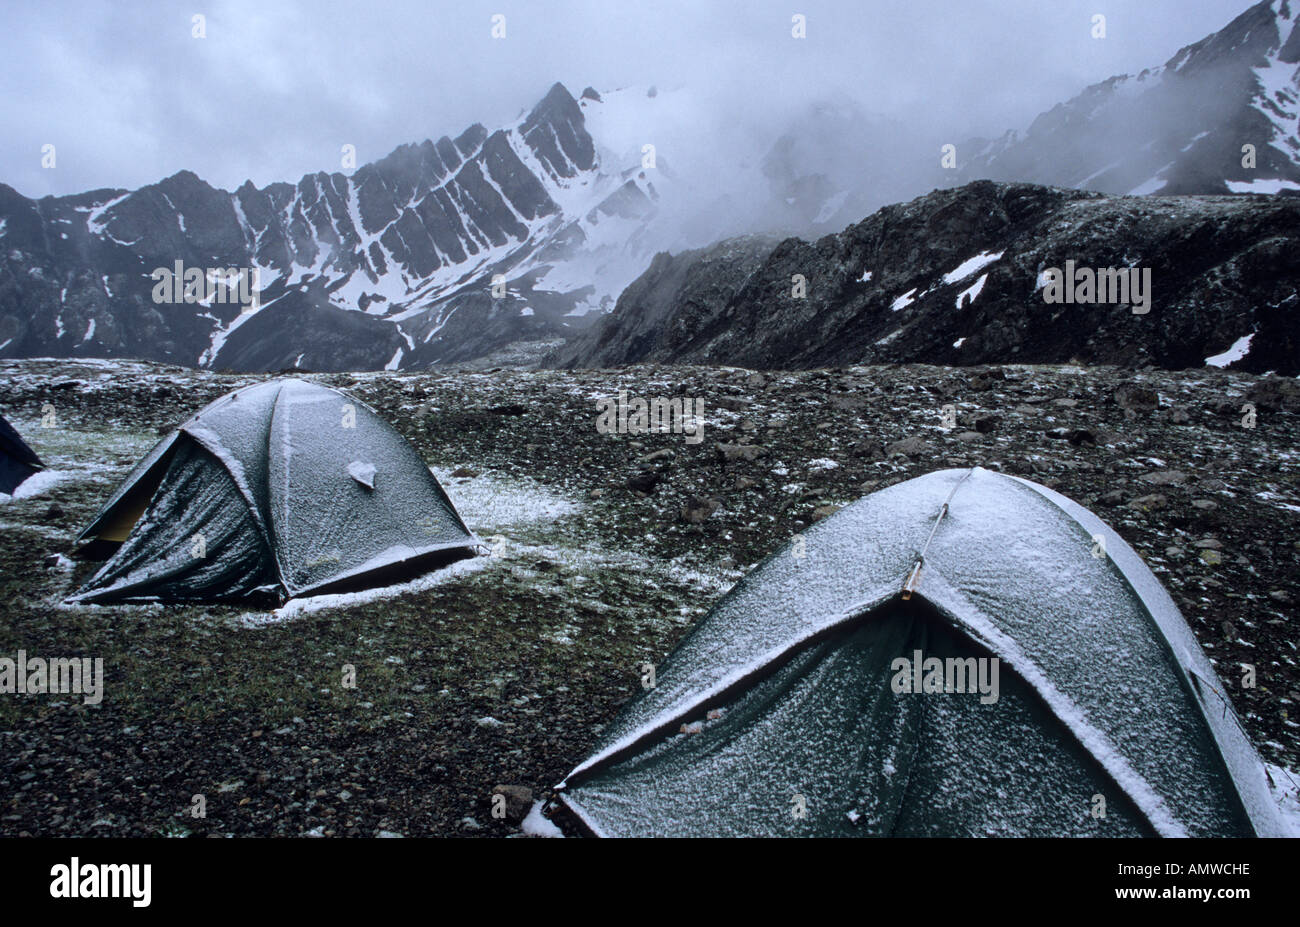 Camp at Ala-Kol, Ala-Kul Pass (3860 m), Terskey Alatau Mountains, Tian Shan, Kyrgyzstan Stock Photo